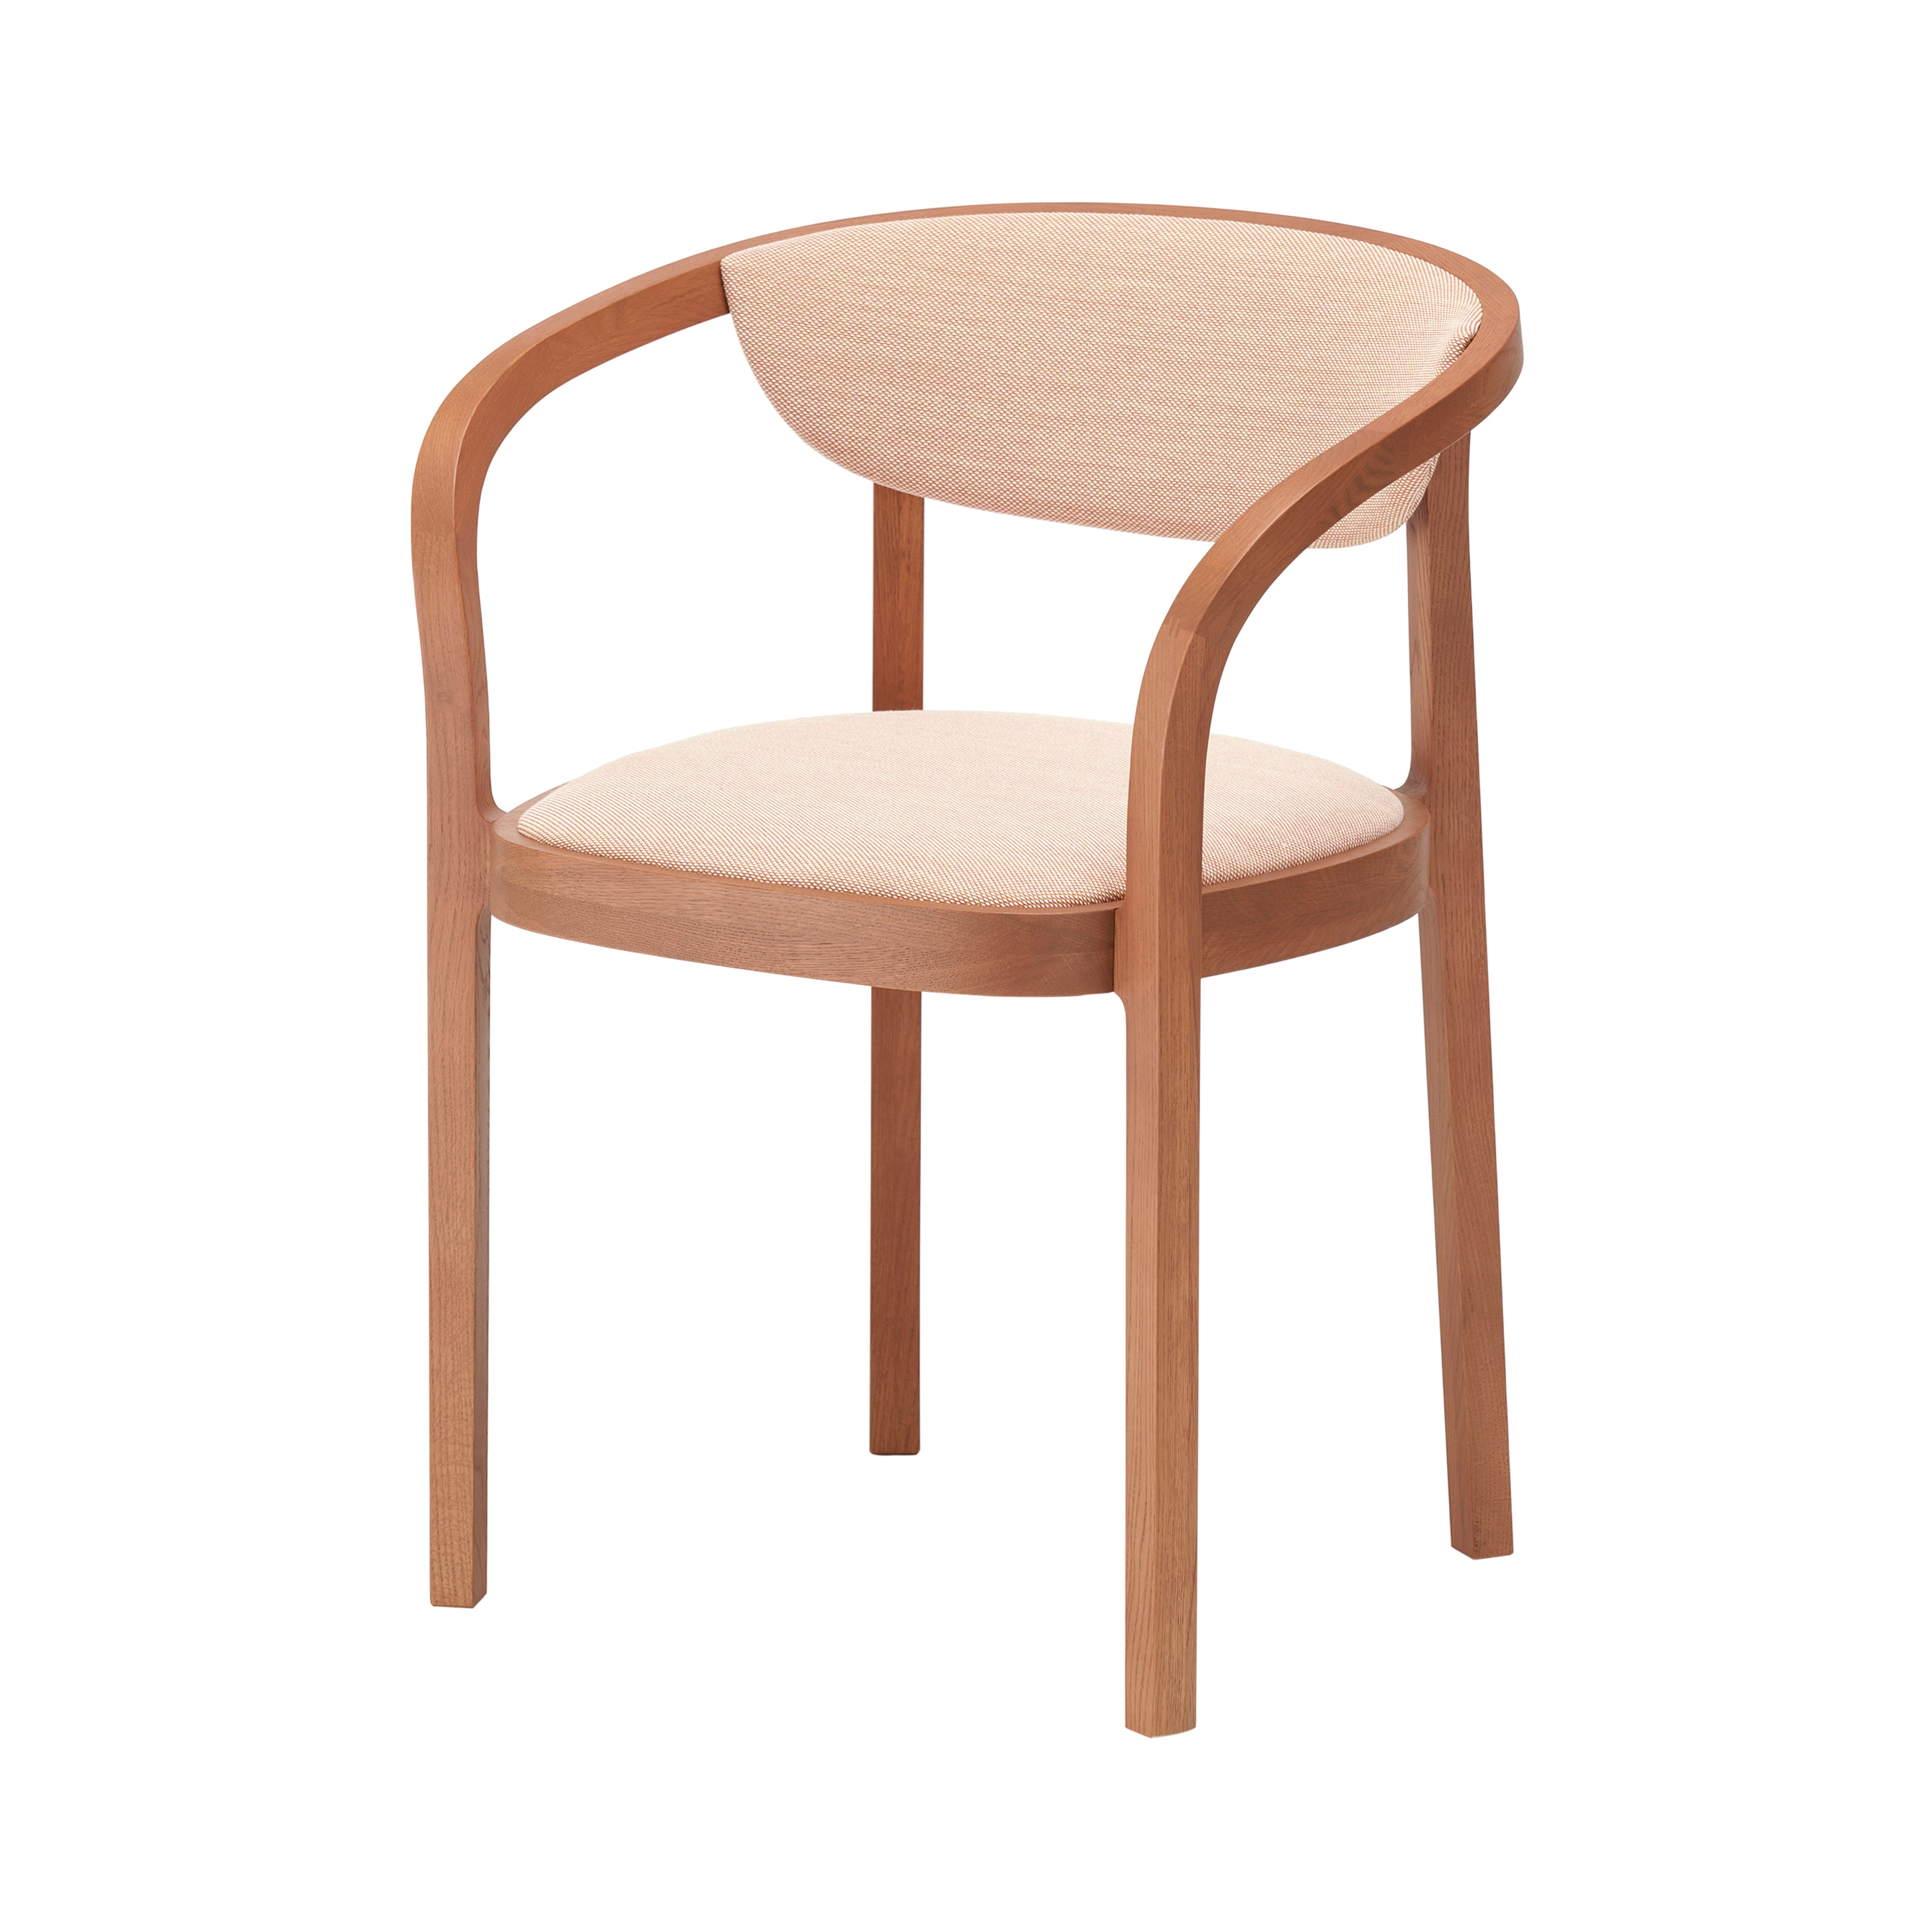 Chesa Chair with Pad: Terracotta